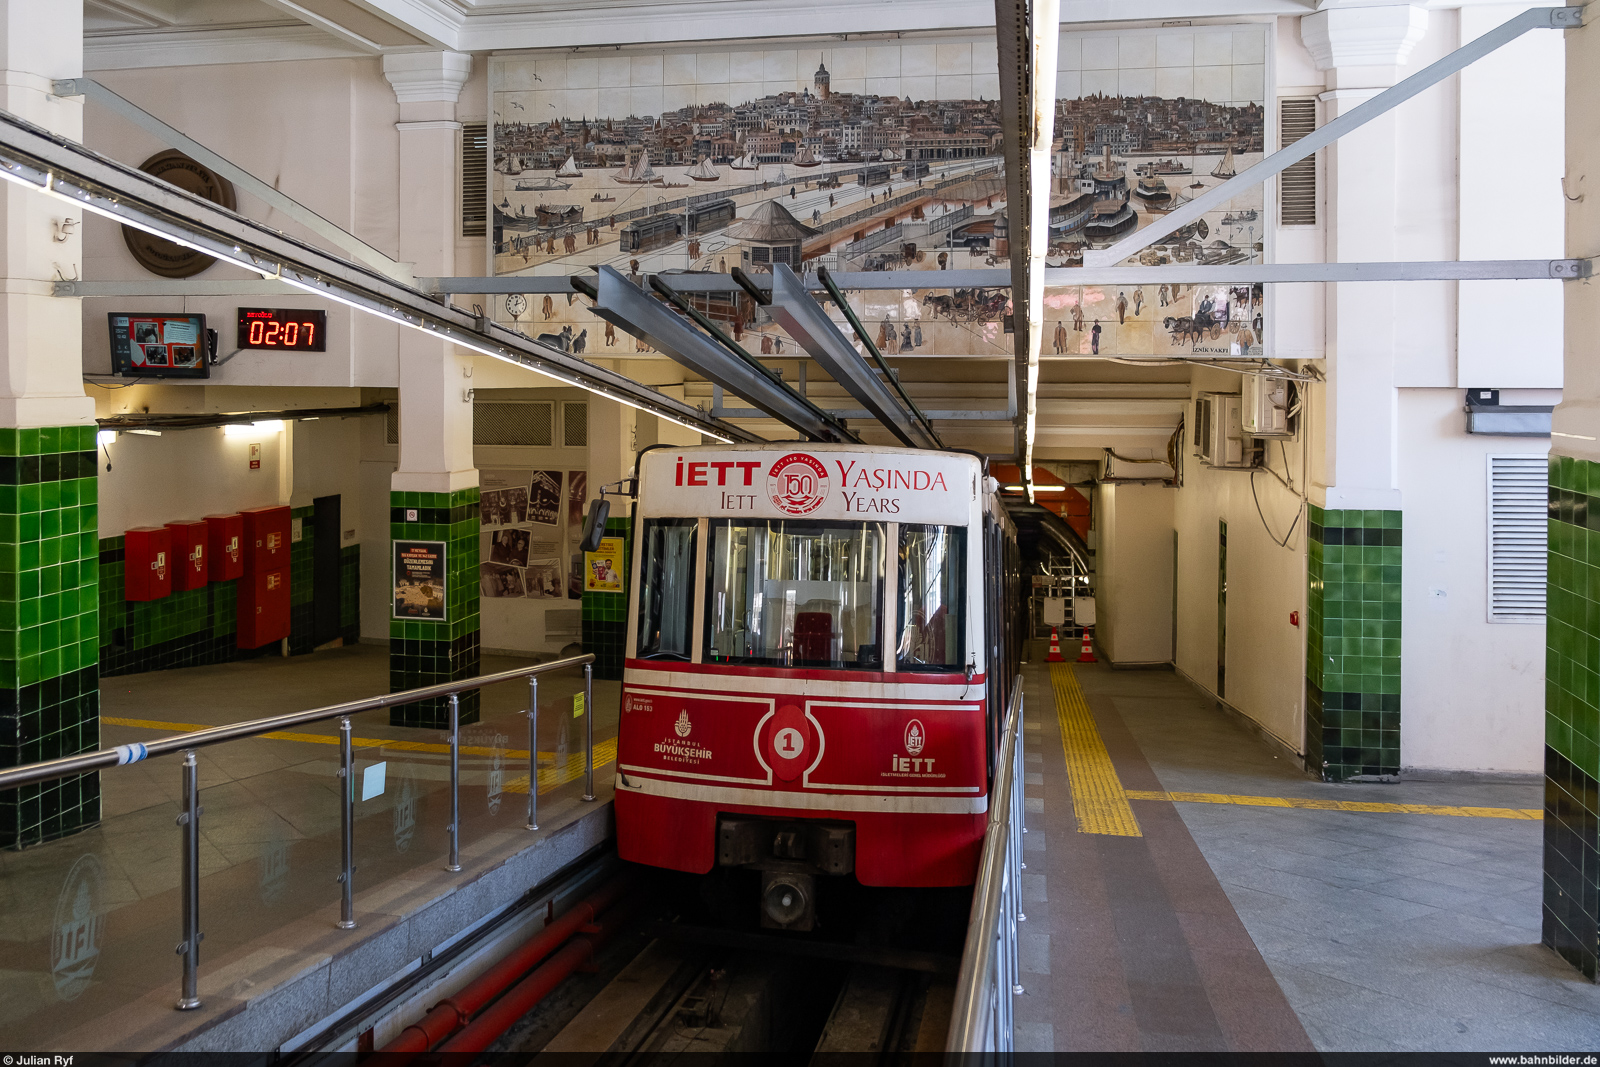 Tünel / Beyoğlu Istanbul, 25. Juli 2023<br>
Die zweitälteste U-Bahn der Welt - die Standseilbahn Tünel in Istanbul.